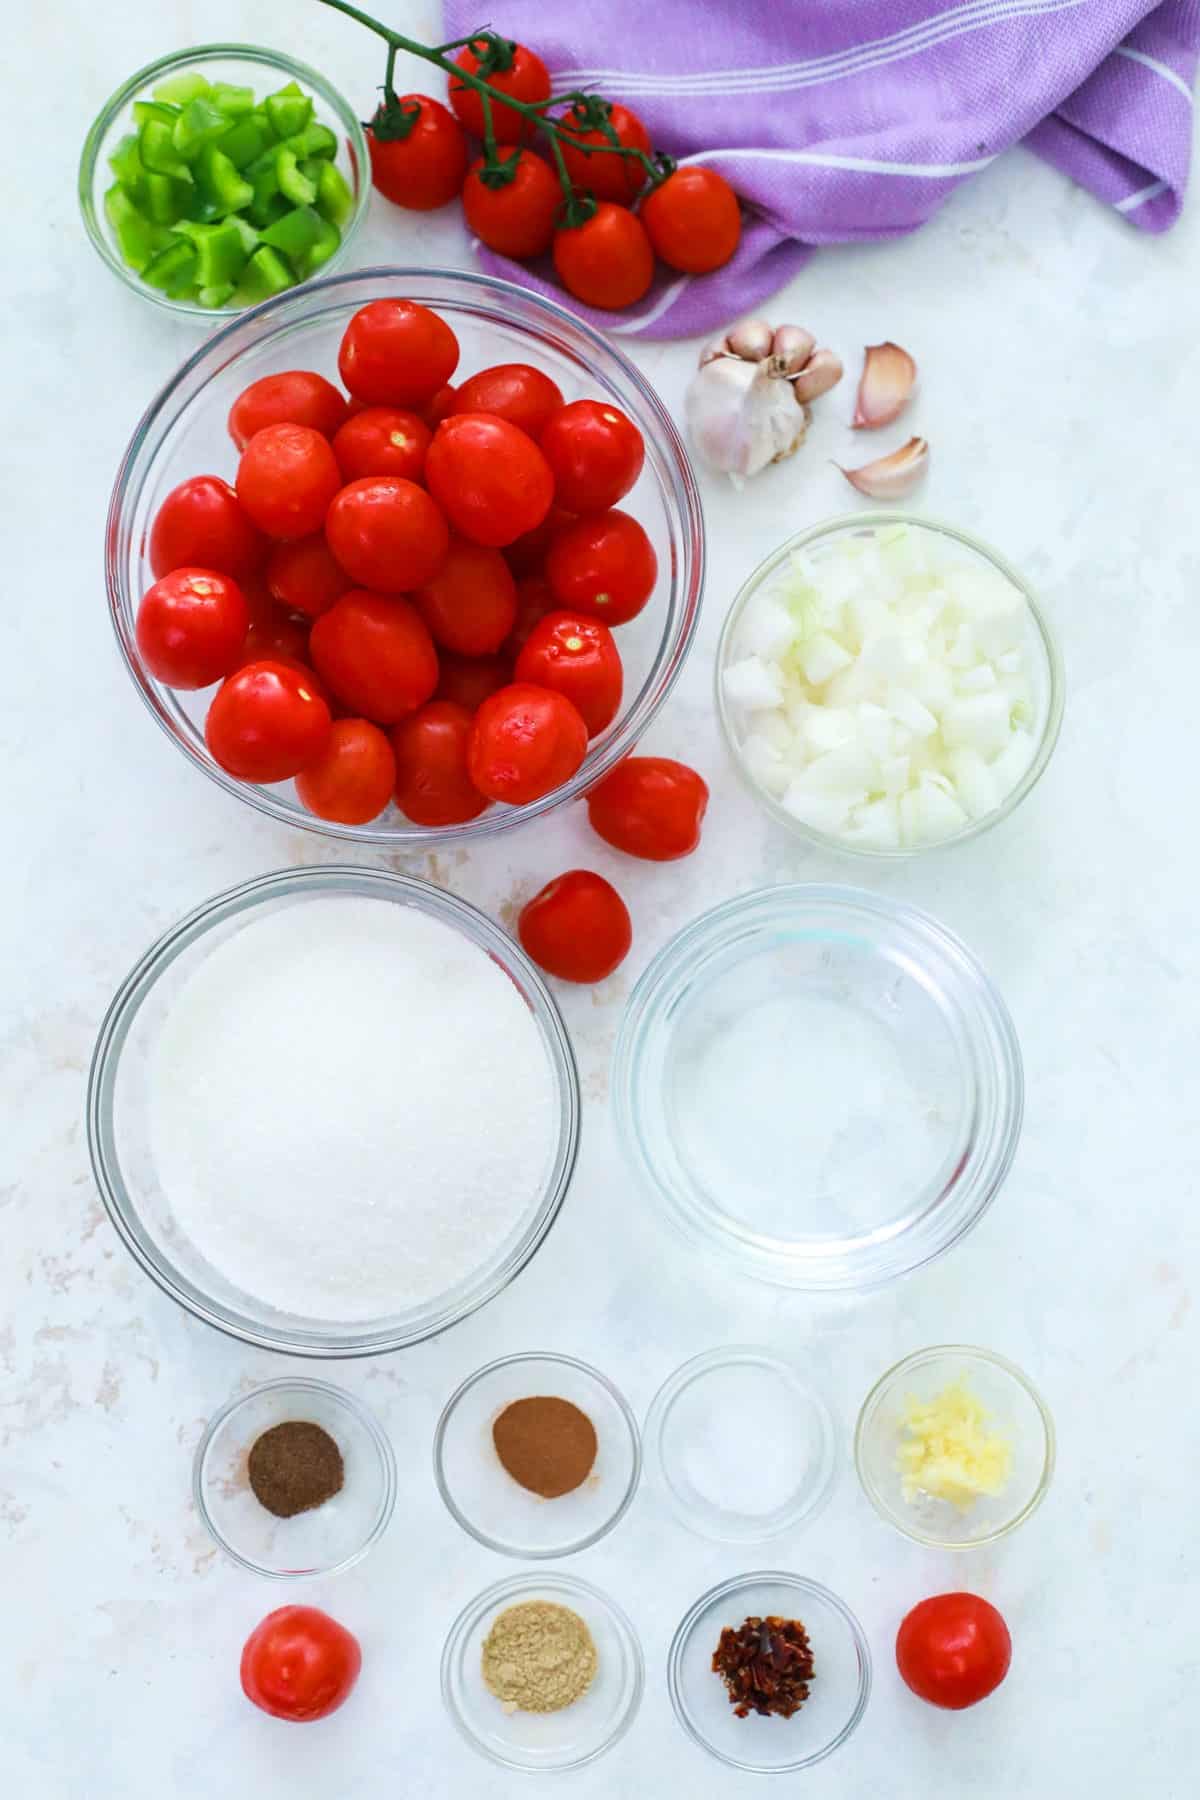 Ingredients for tomato jam